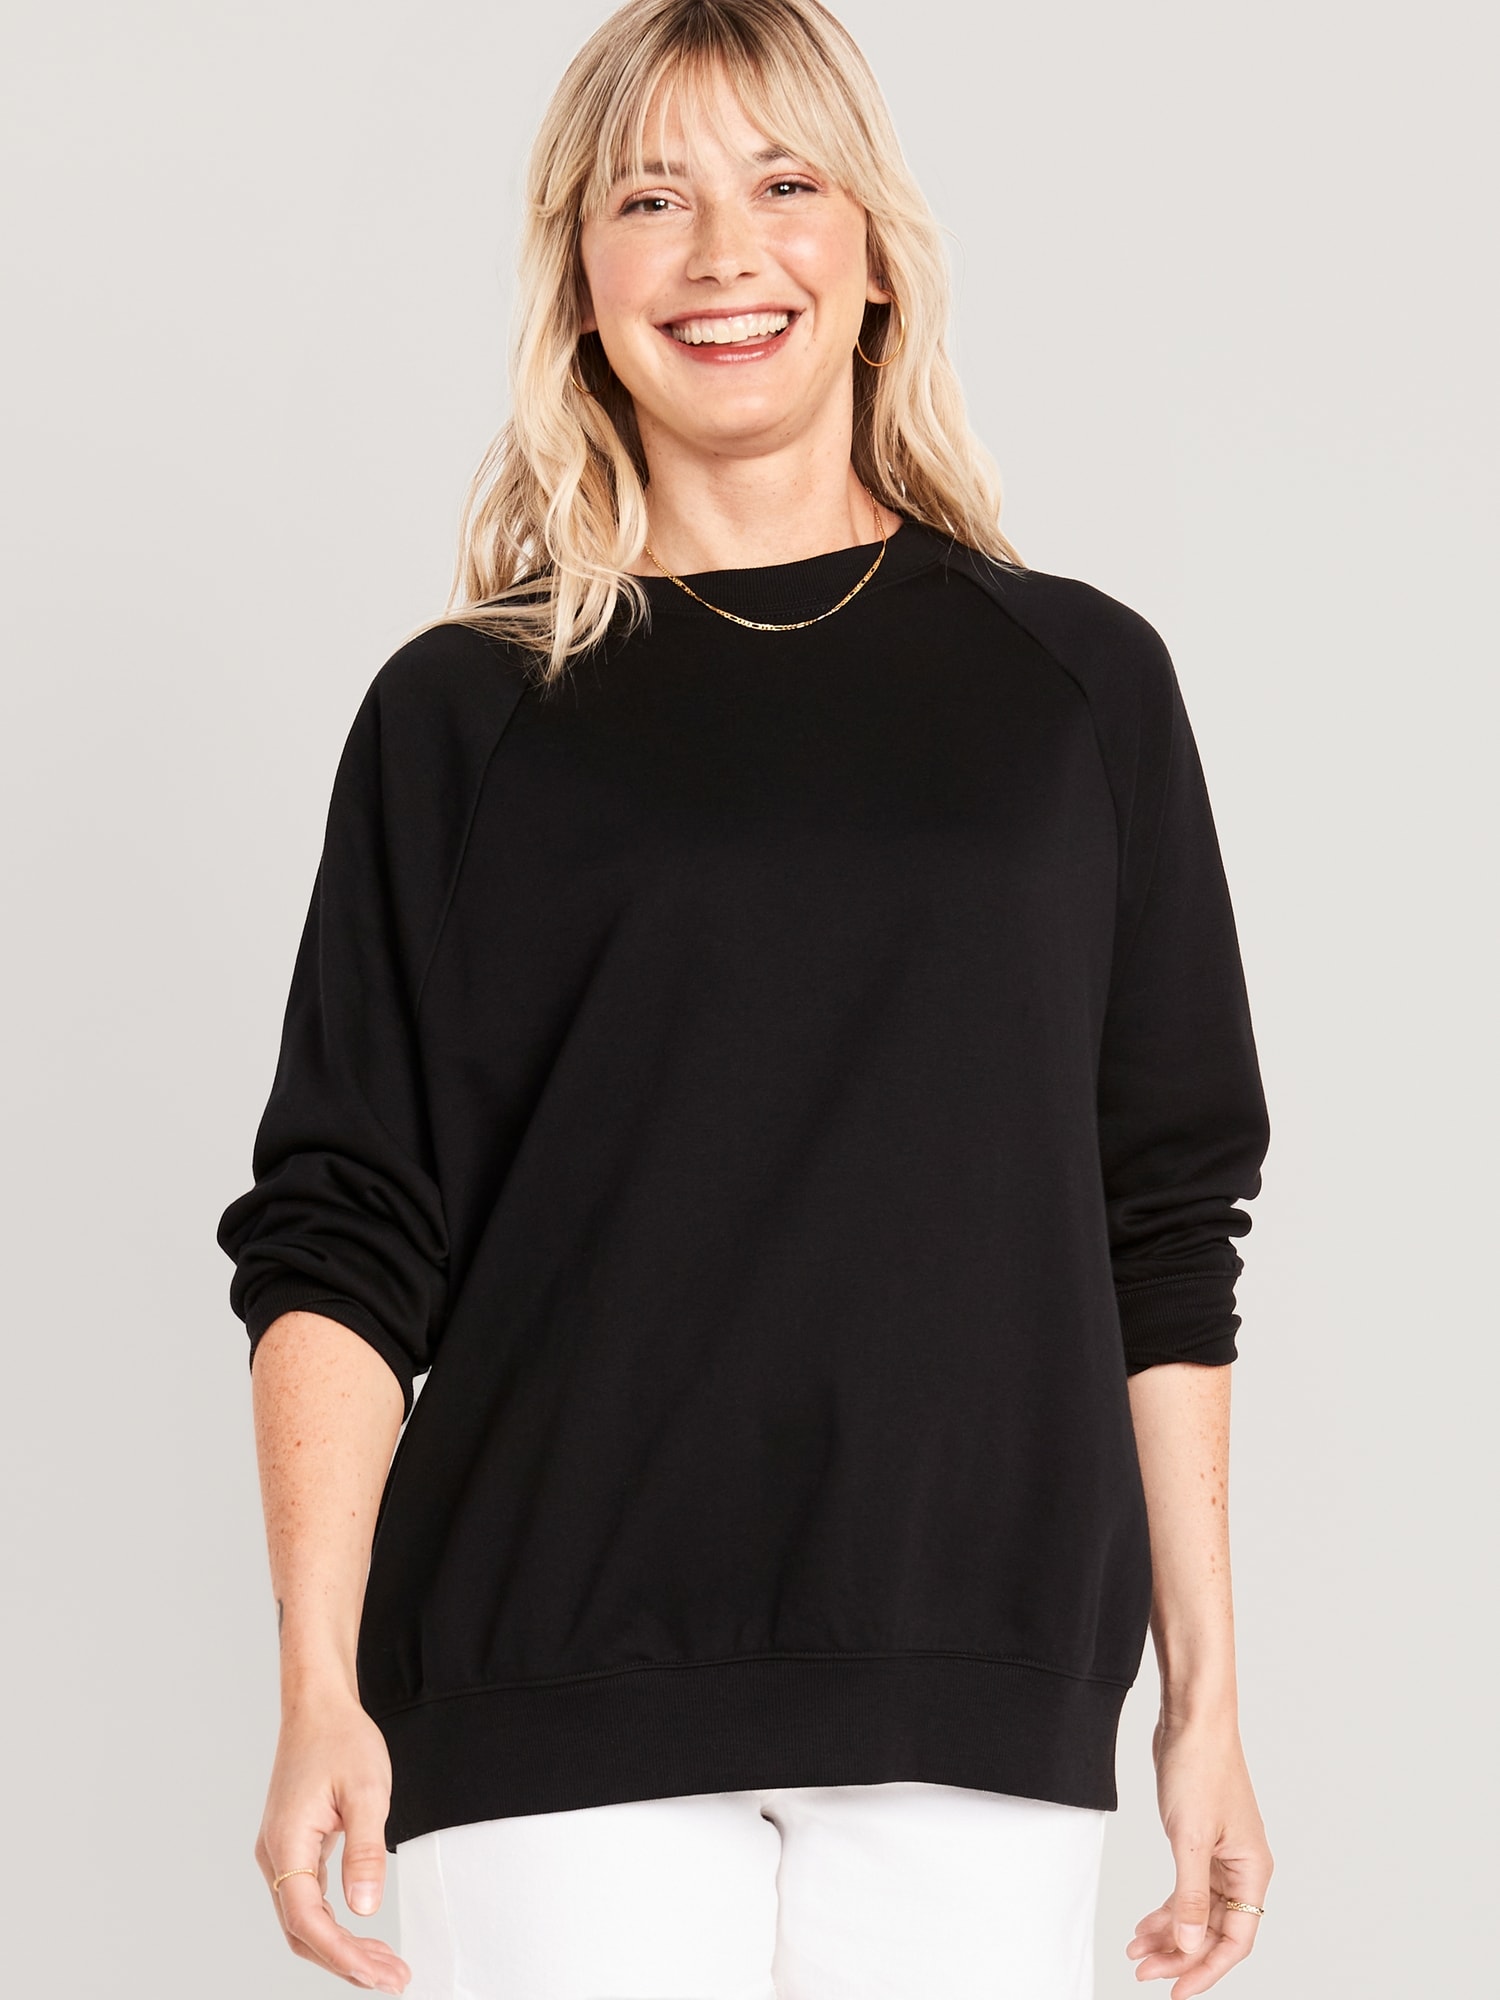 Oversized French Terry Tunic Sweatshirt for Women